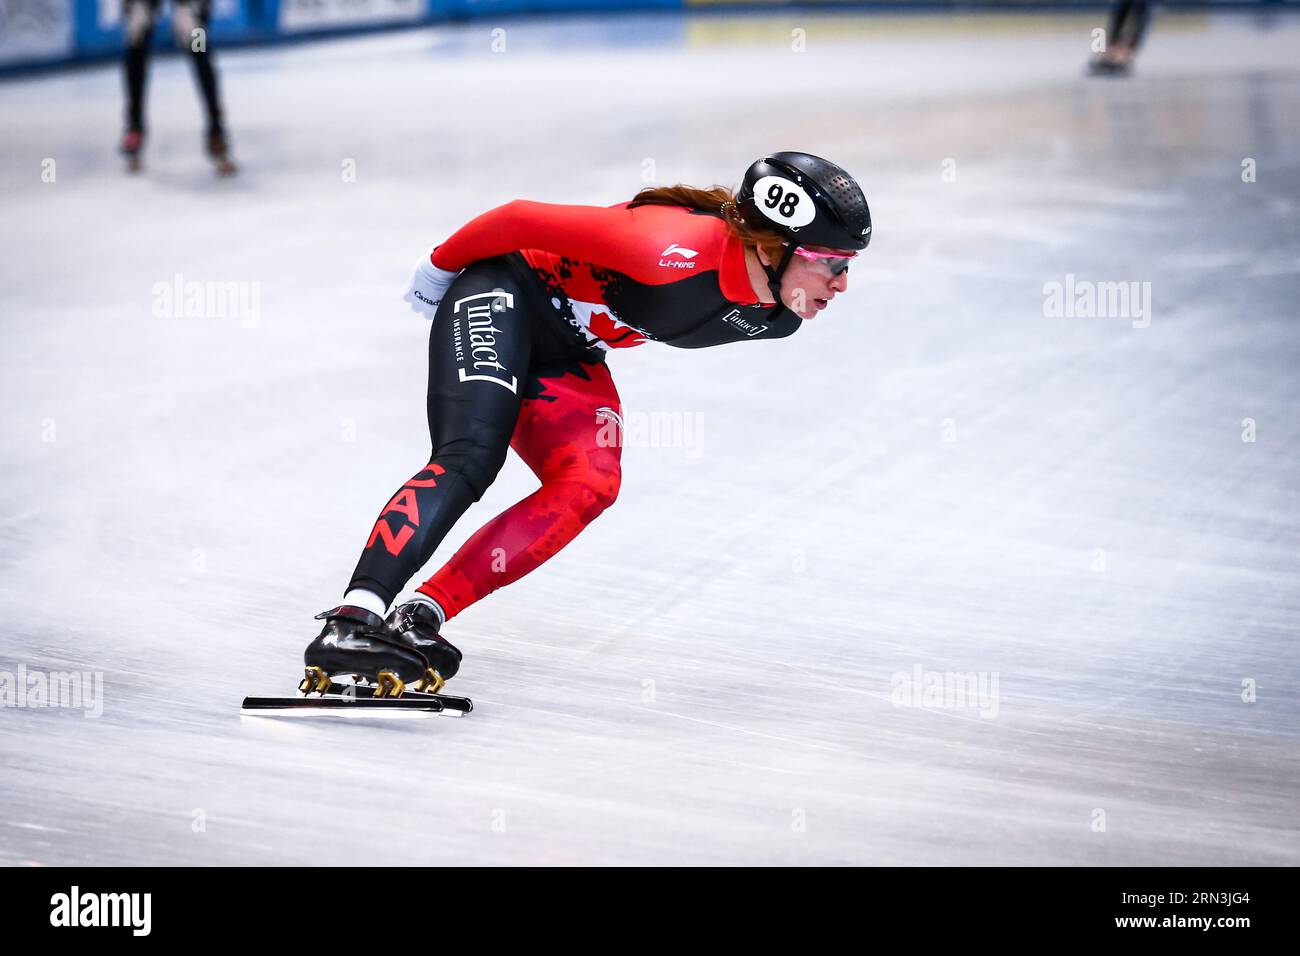 Dresden, 3. Februar 2019: Kanadischer Skater nimmt an der ISU Short Track Speed Skating World Cup in Dresden Teil Stockfoto